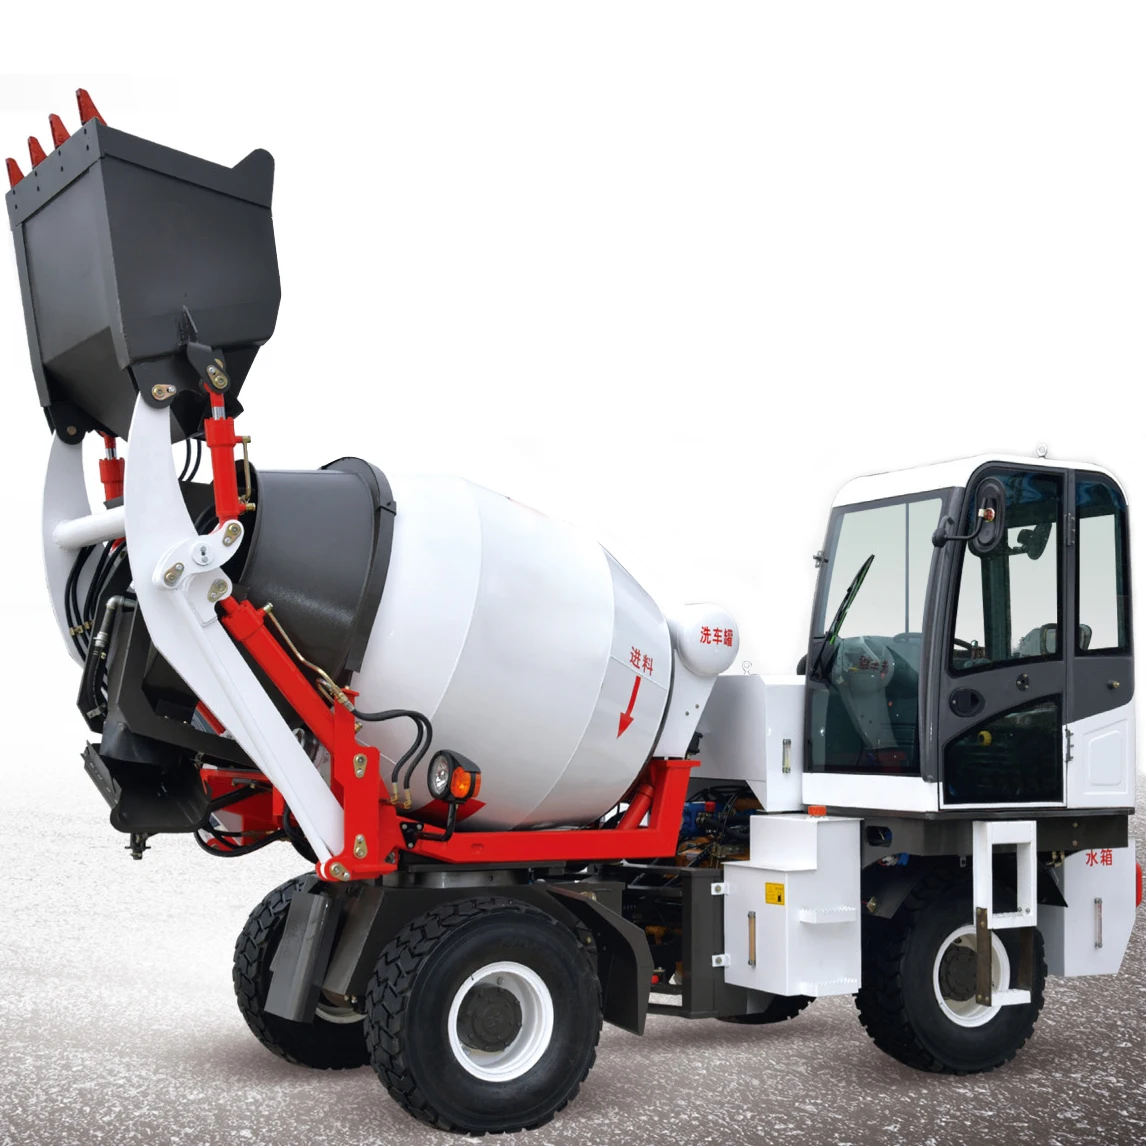 self-loading concrete mixer,automatic feeding tank agitator mixer ,dumper concrete mixer can make the working efficiency higher